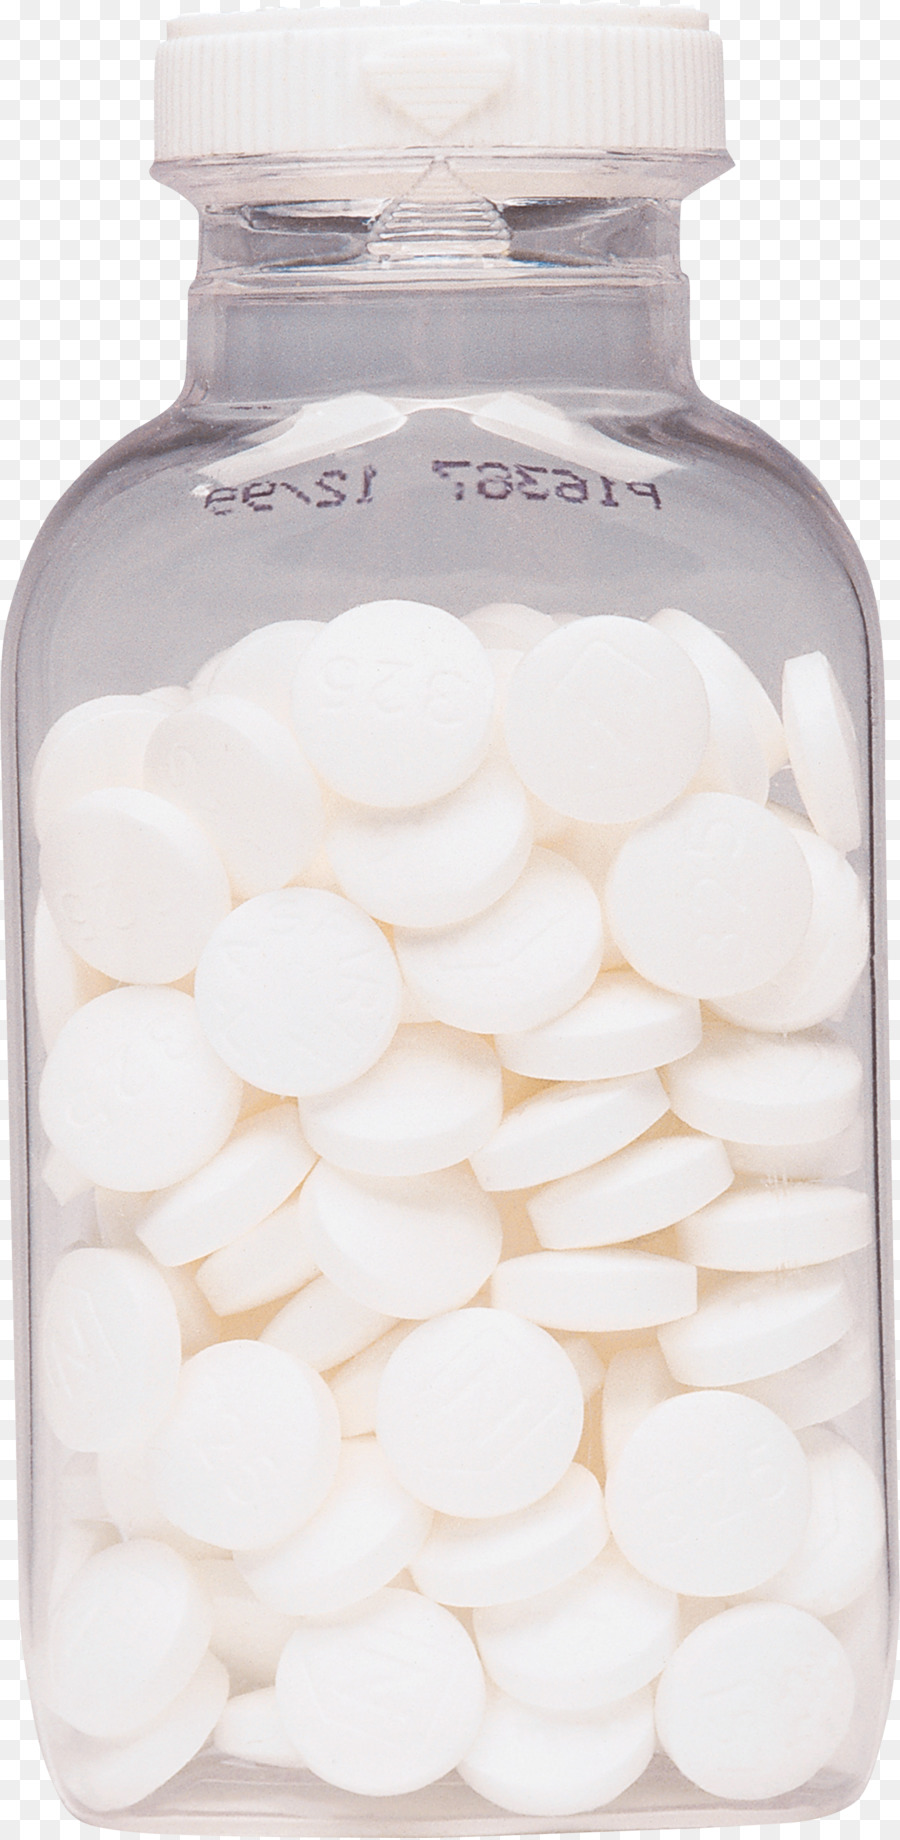 Aspirina Fotografia Clip art - altri